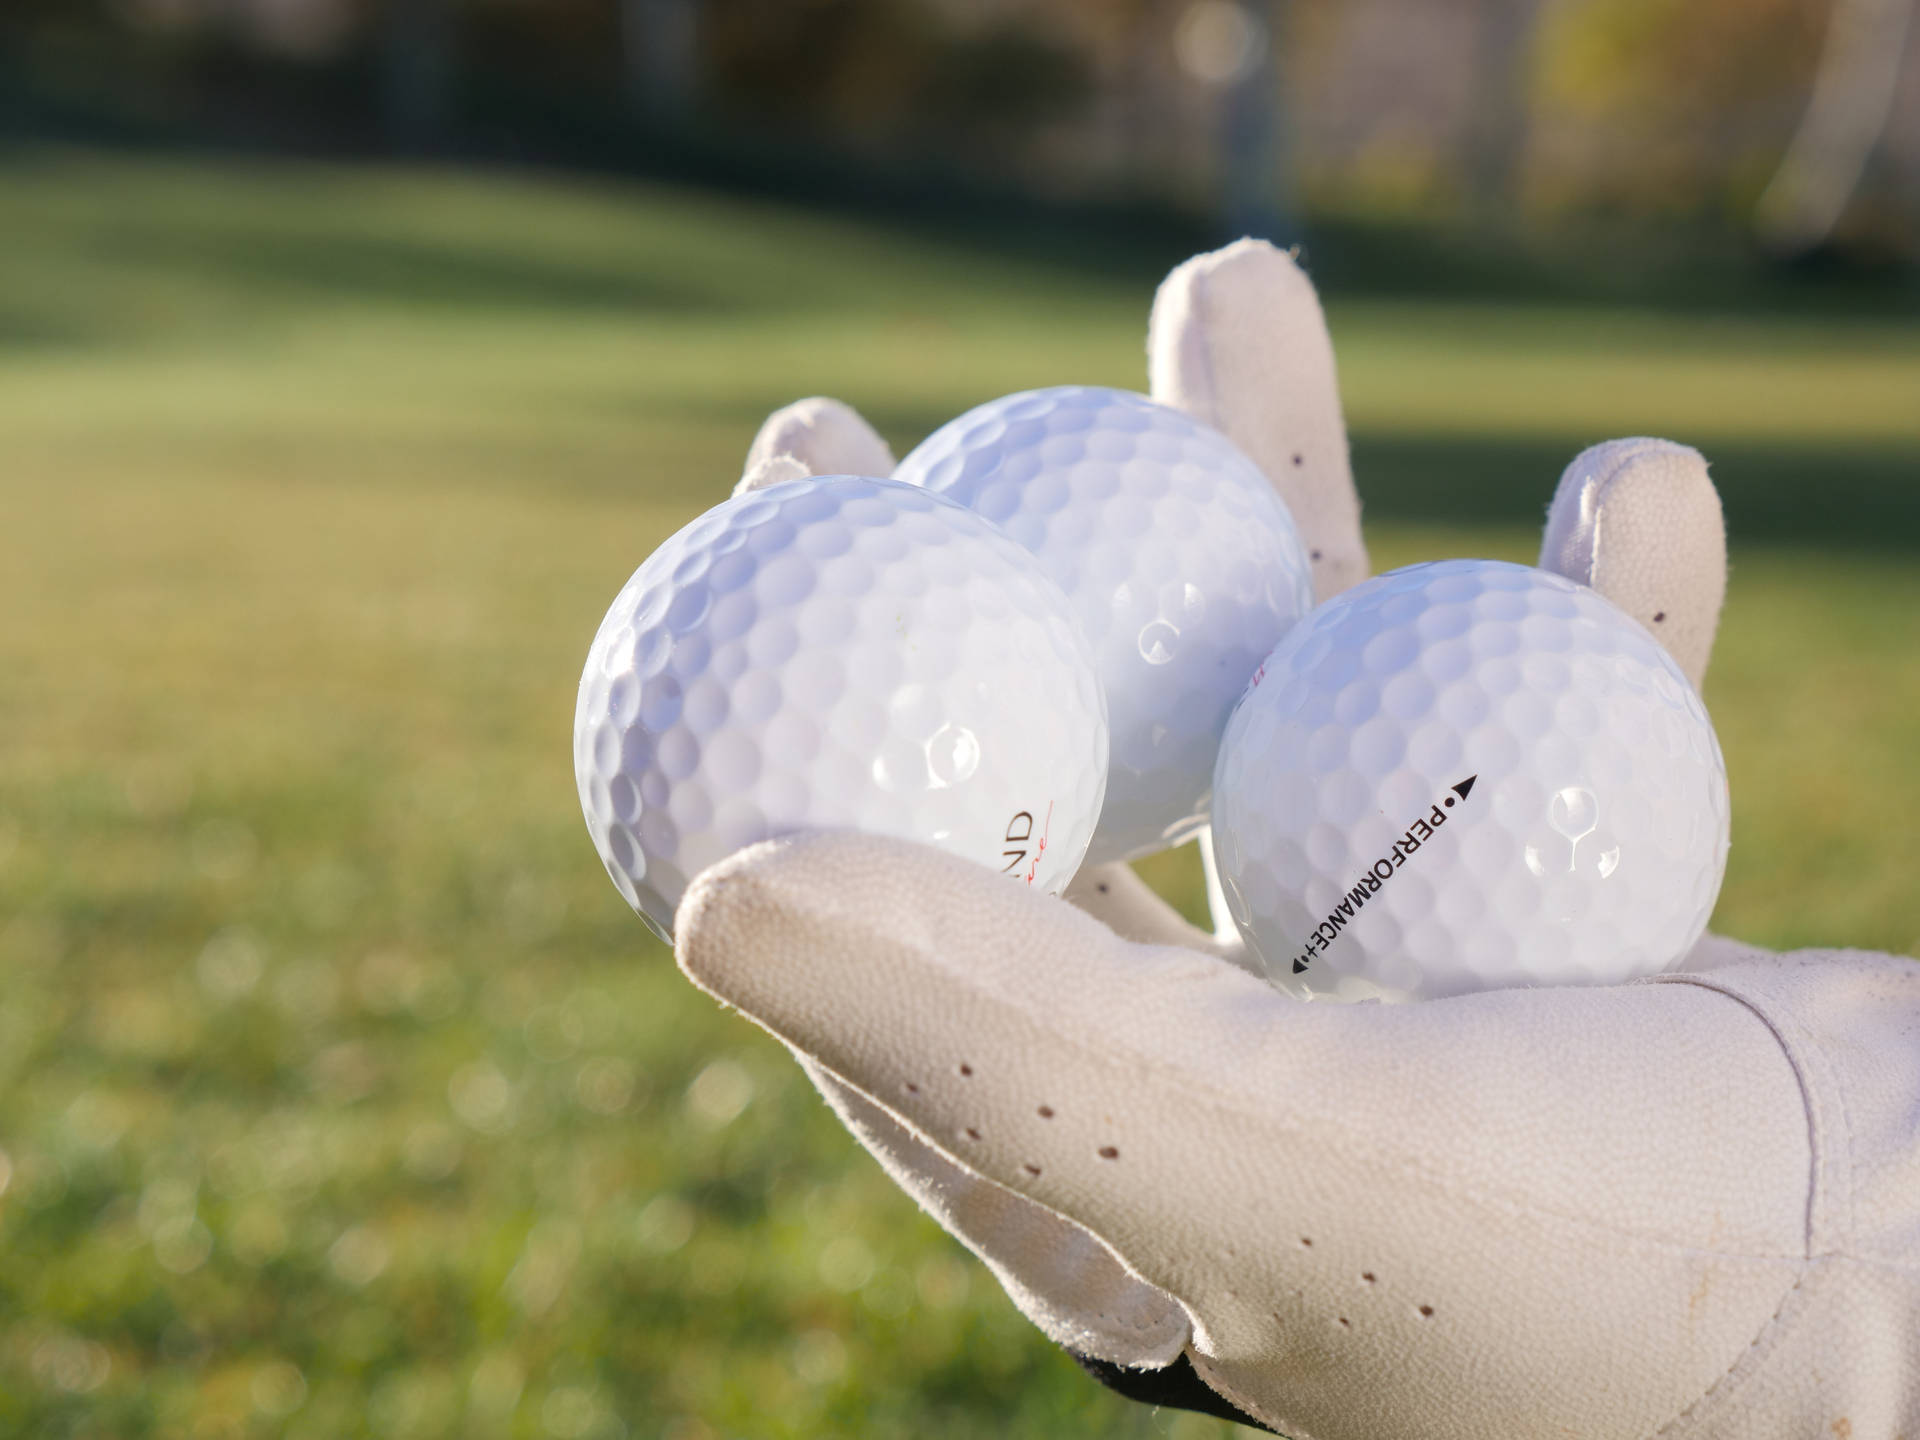 4k Three White Golf Balls On Hand